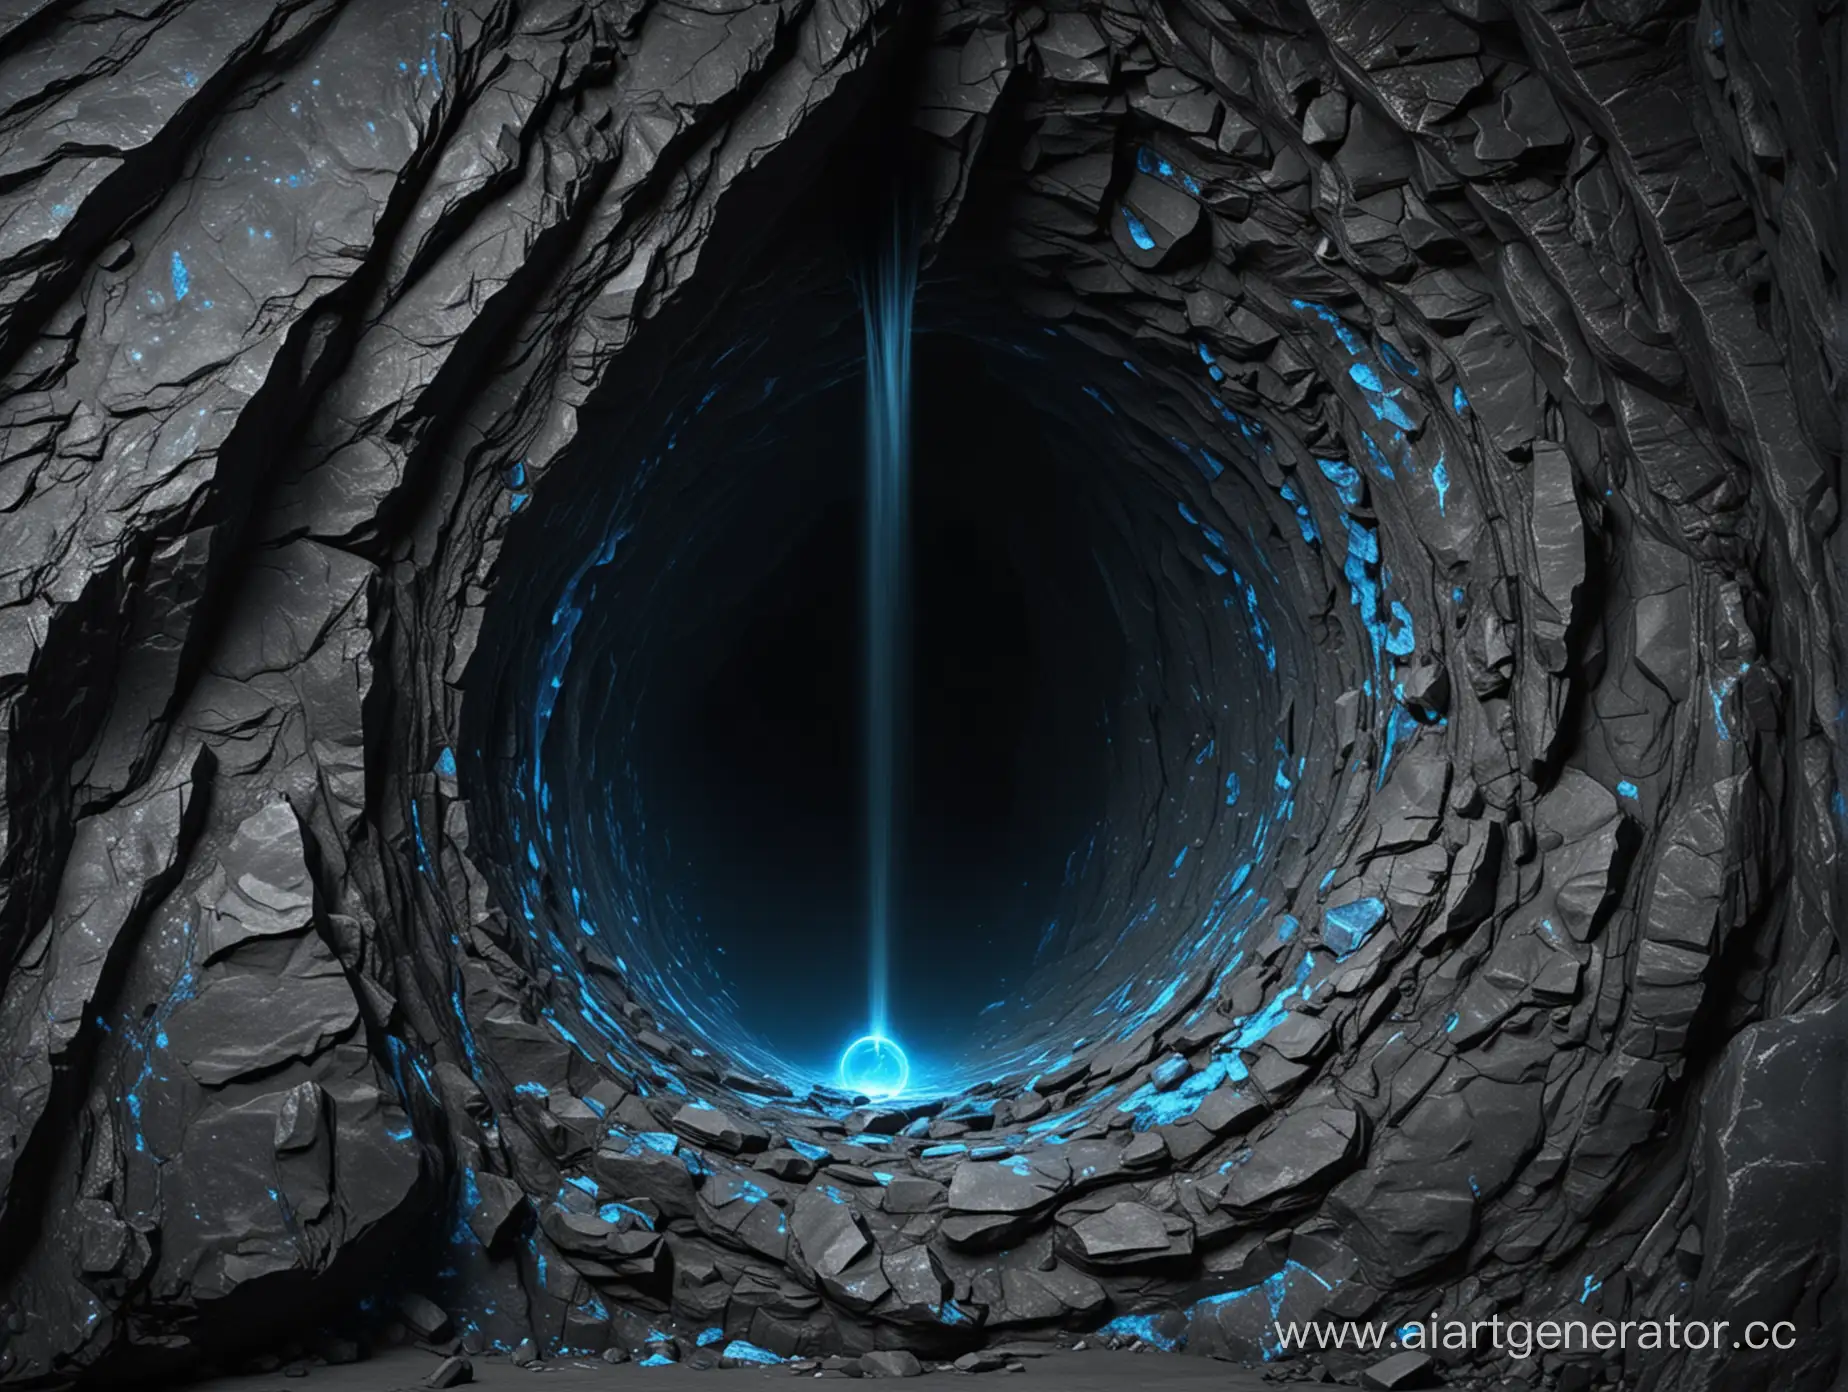 Mystical-Blue-Portal-in-Dark-Rock-Landscape-HighQuality-Realistic-Photo-4K